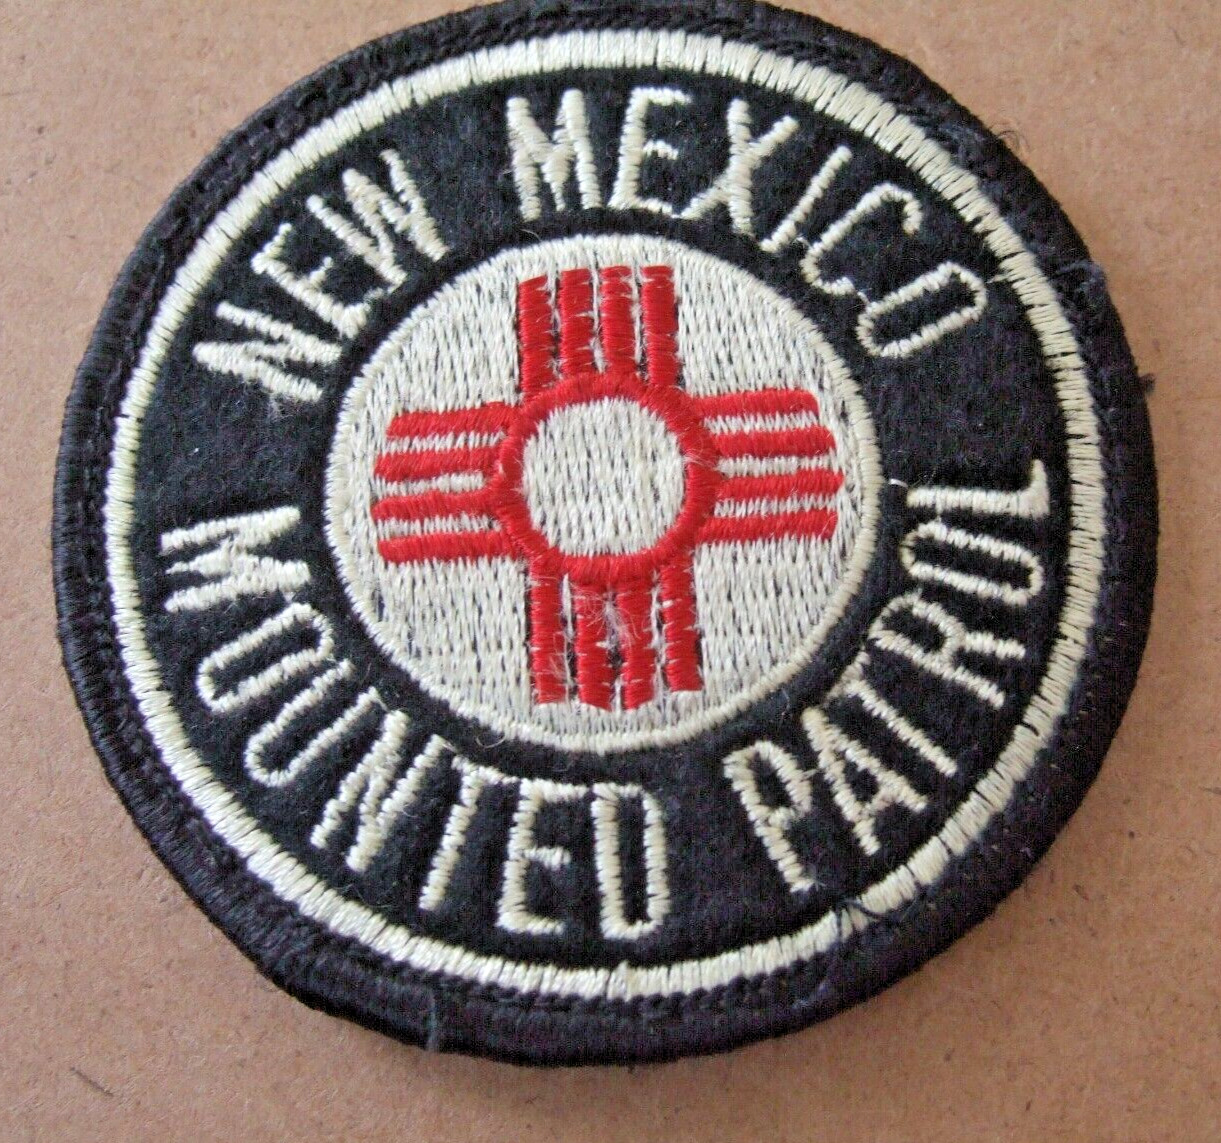 RARE   NEW MEXICO MOUNTED PATROL PATCH    BLACK,GRAY,RED   ZIA SUN SYMBOL    HTF